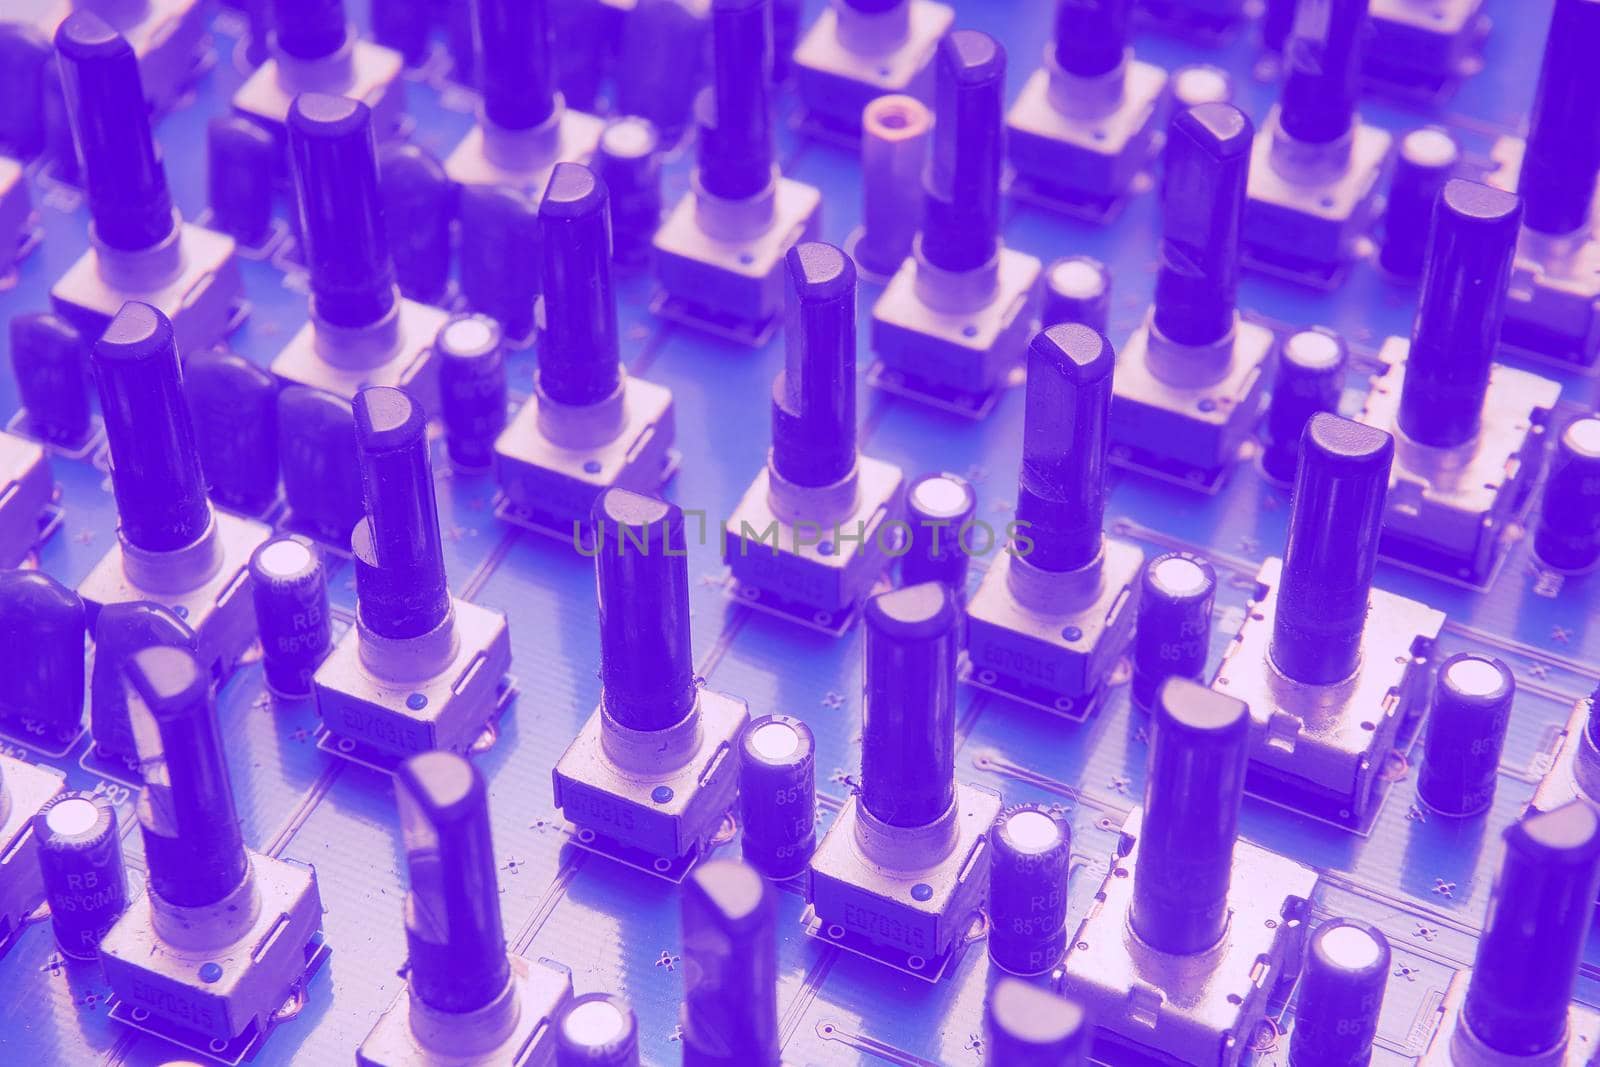 Volume potentiometer mixer knobs in purple blue haze by jovani68